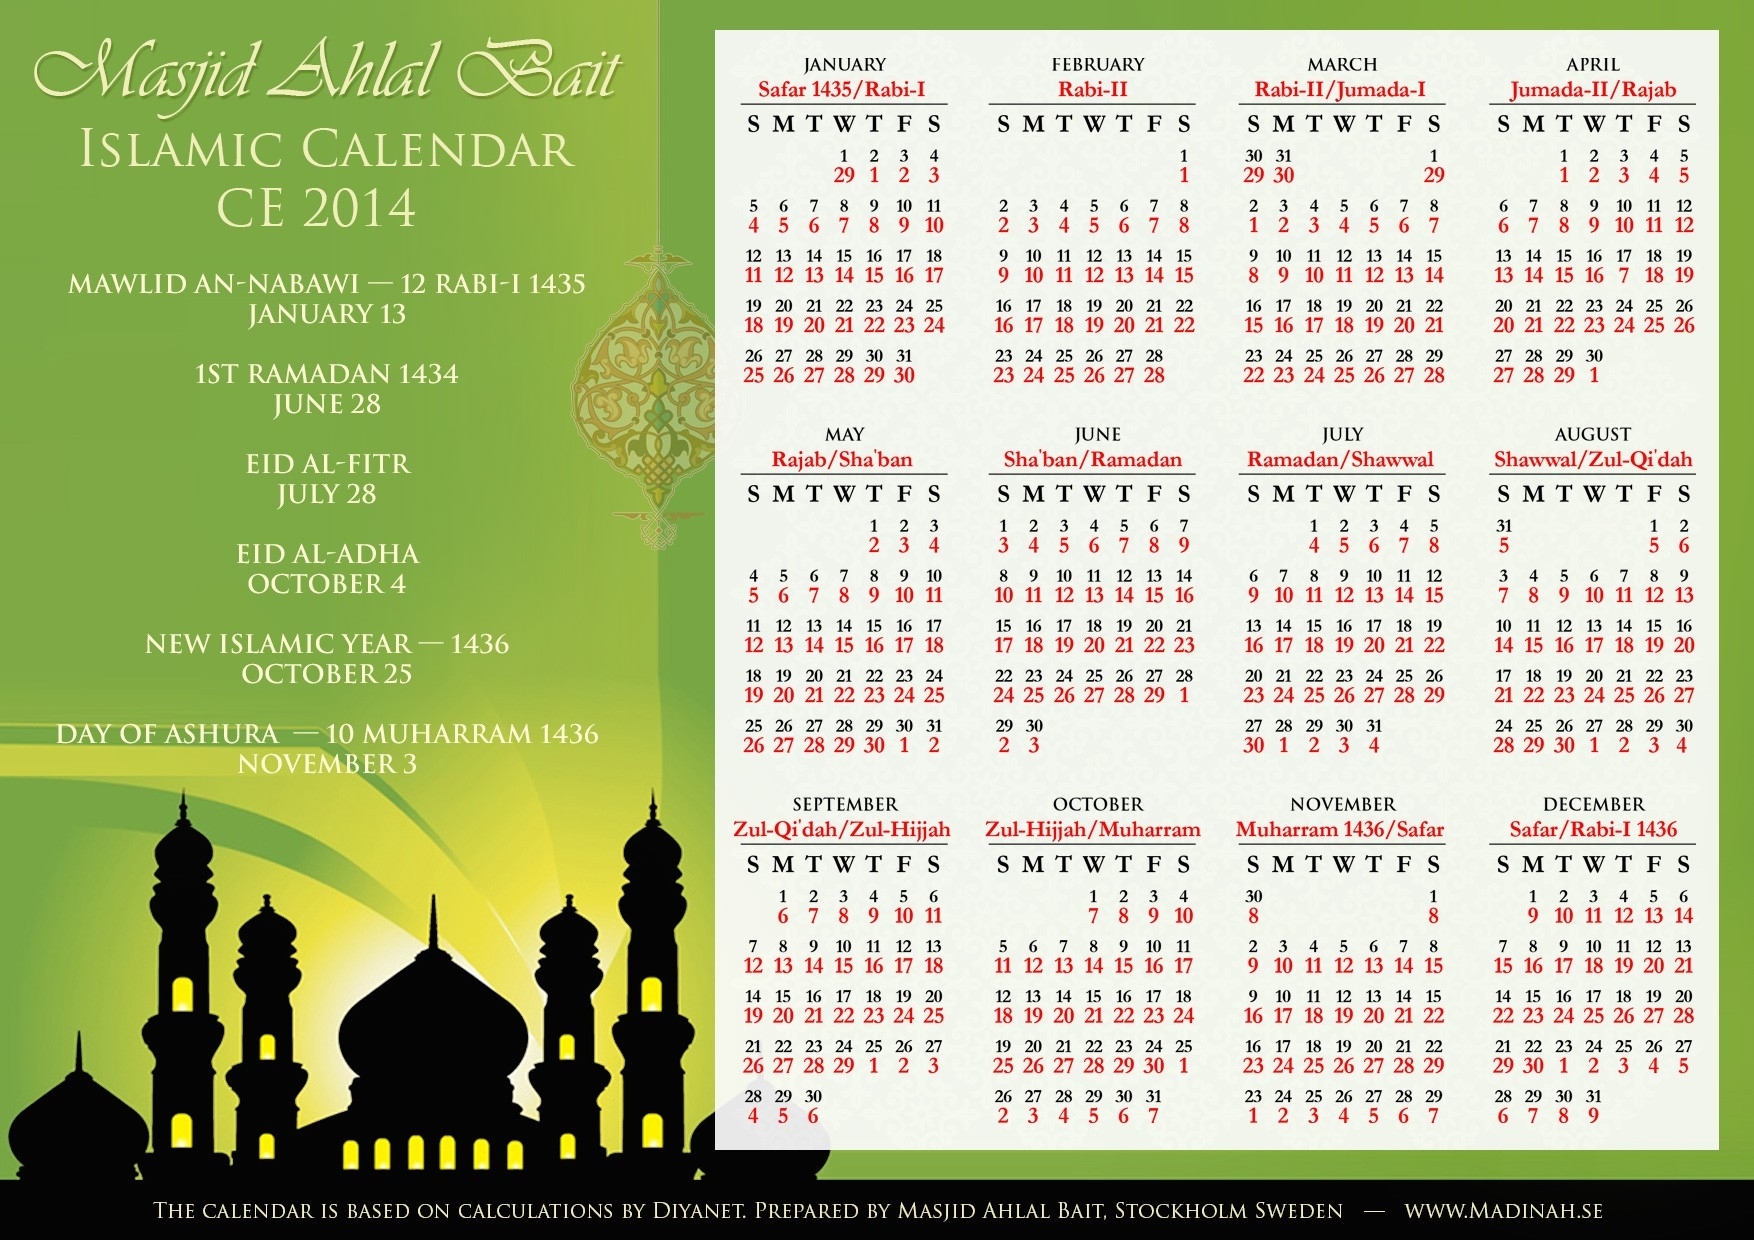  Islamic Calendar 2015 Pdf Free Download